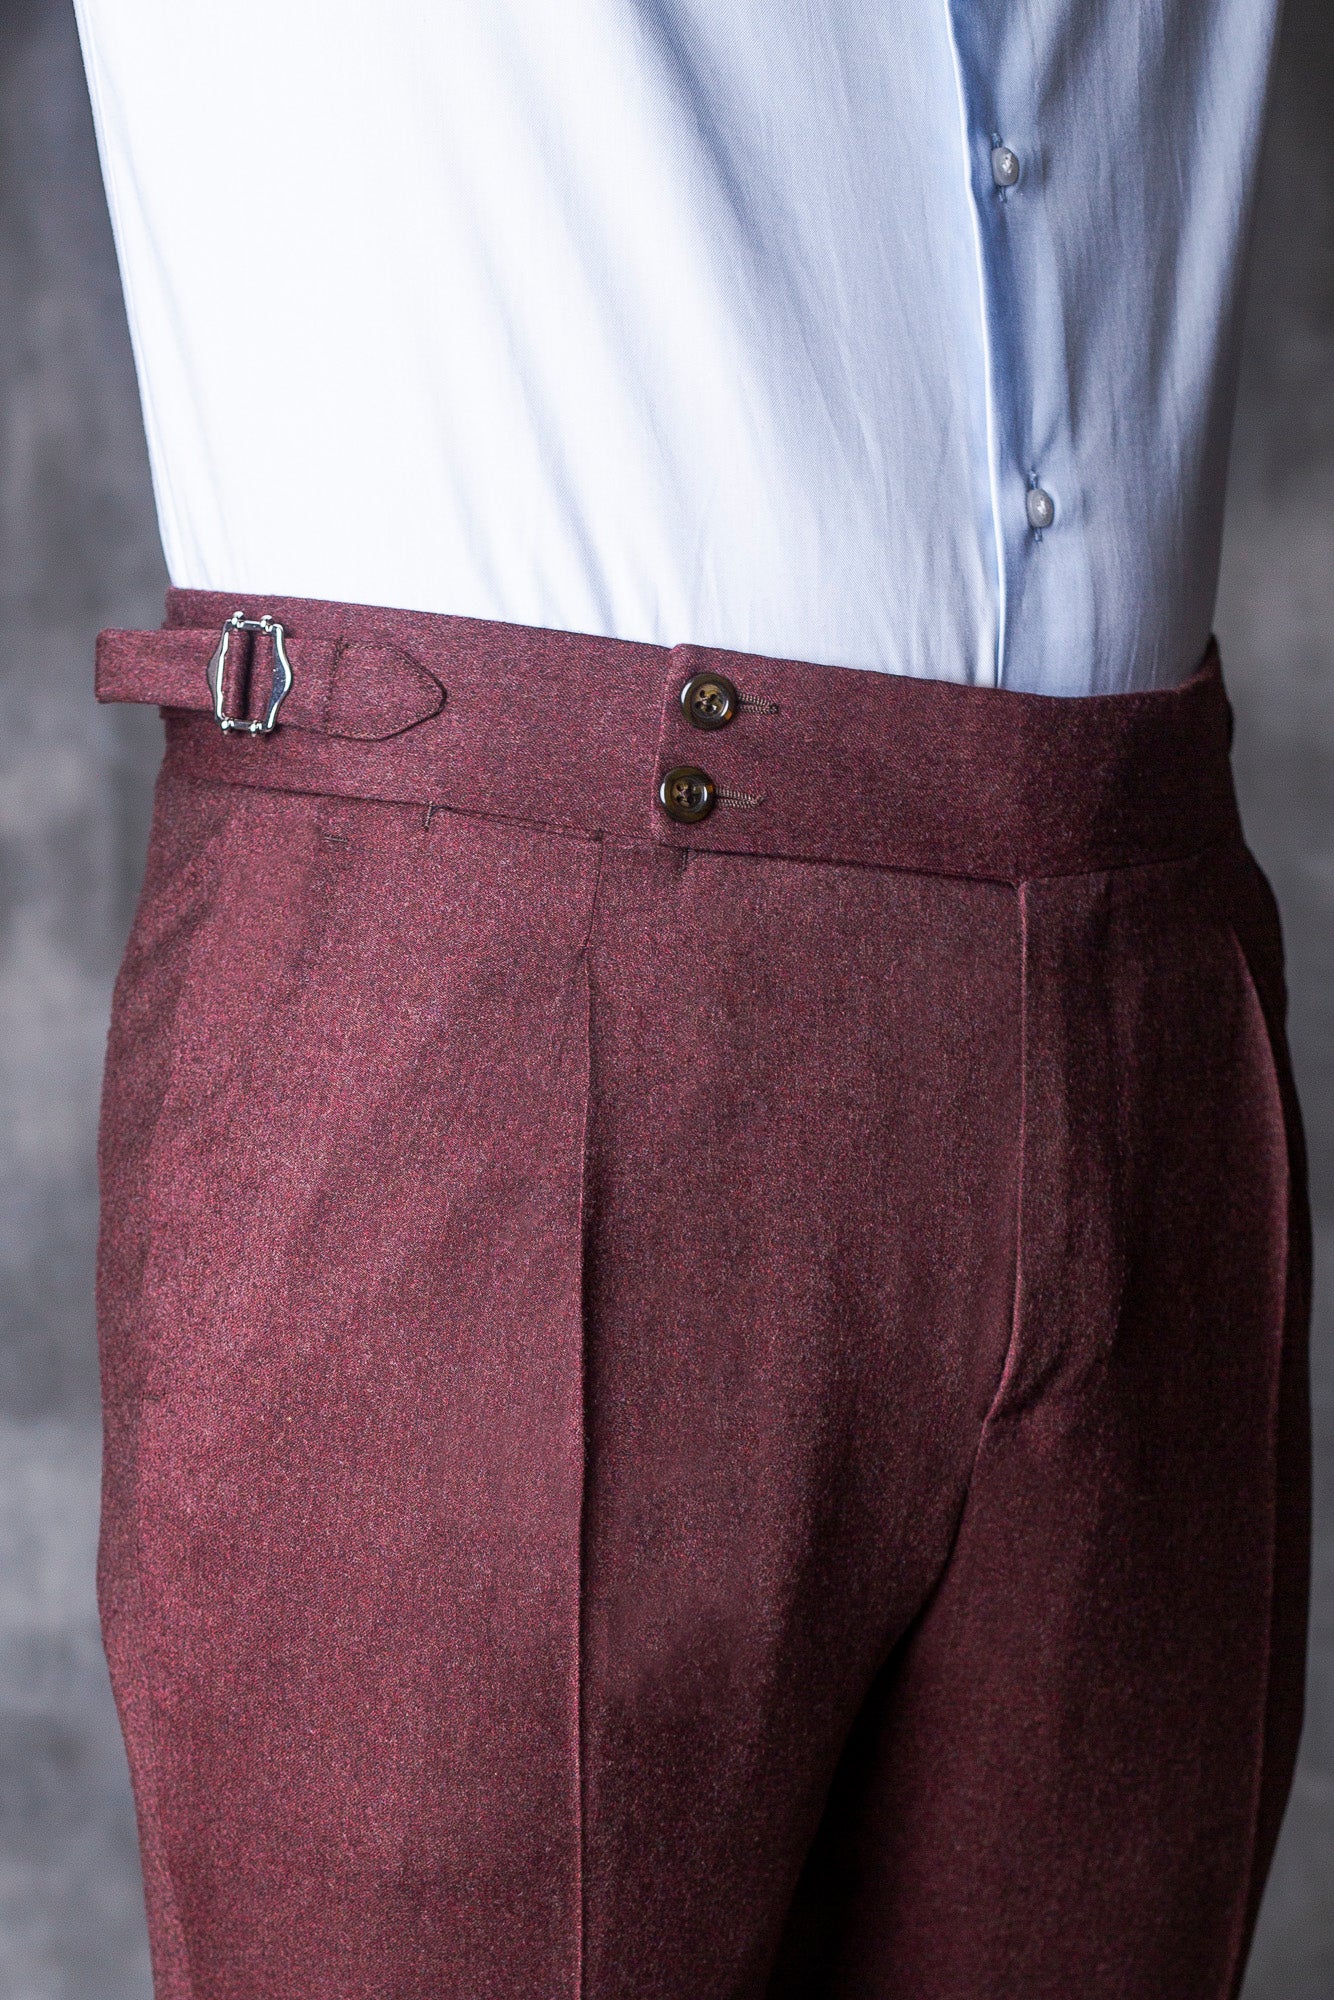 Pantalon en flanelle bordeaux Soragna Capsule Collection, Made in Italy